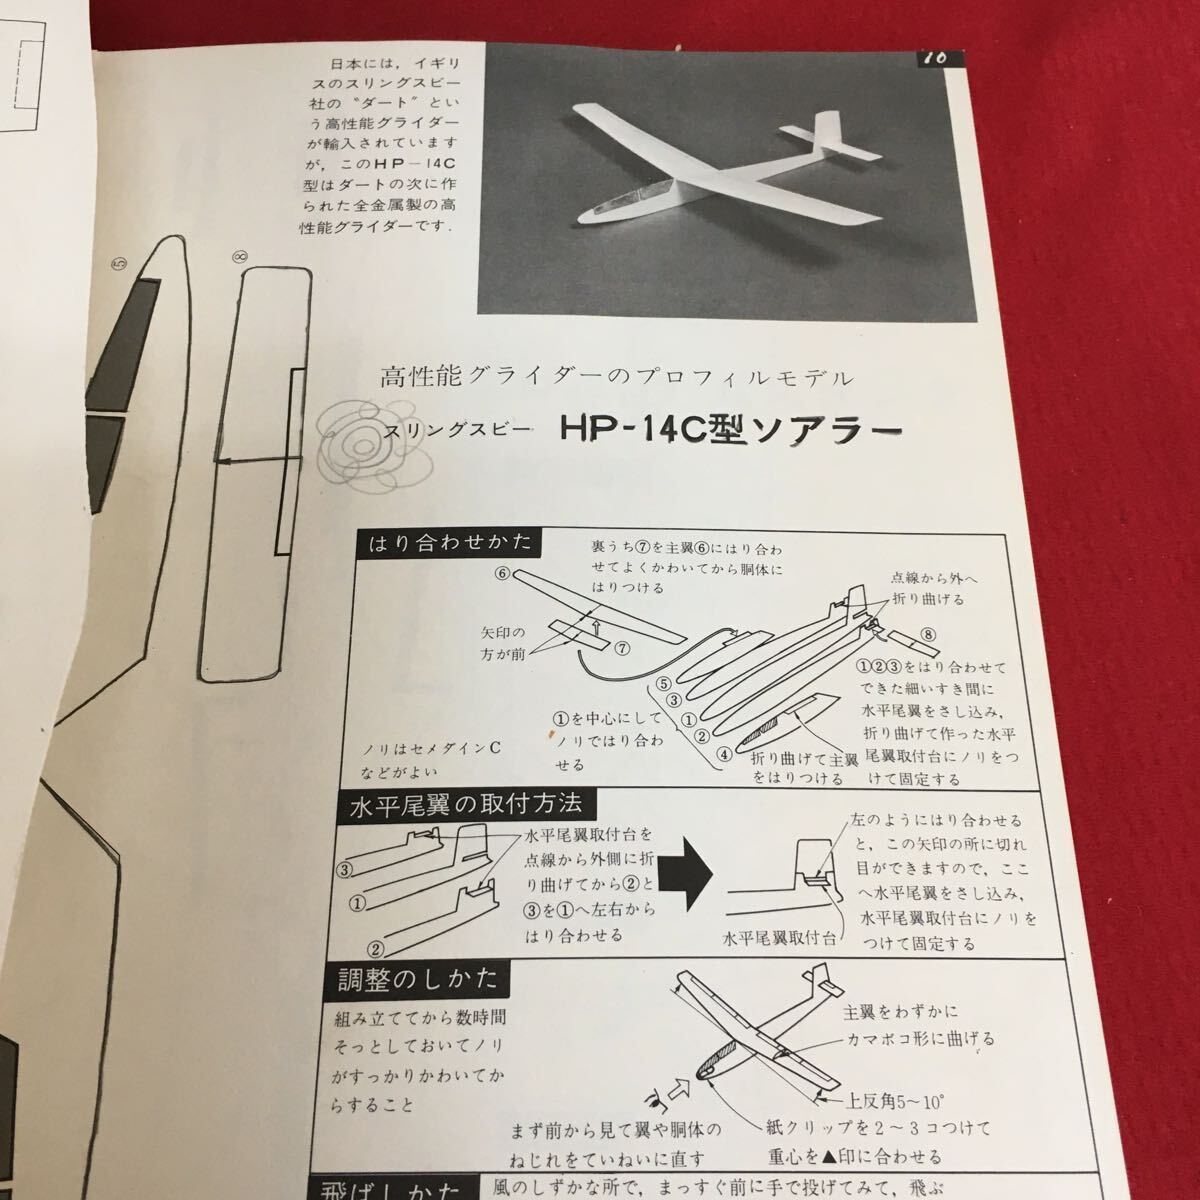 g-354 子供の科学別冊 よく飛ぶ紙飛行機集 切りぬく本 昭和47年8月31日 第1版発行 ユンカース ※3 _画像6